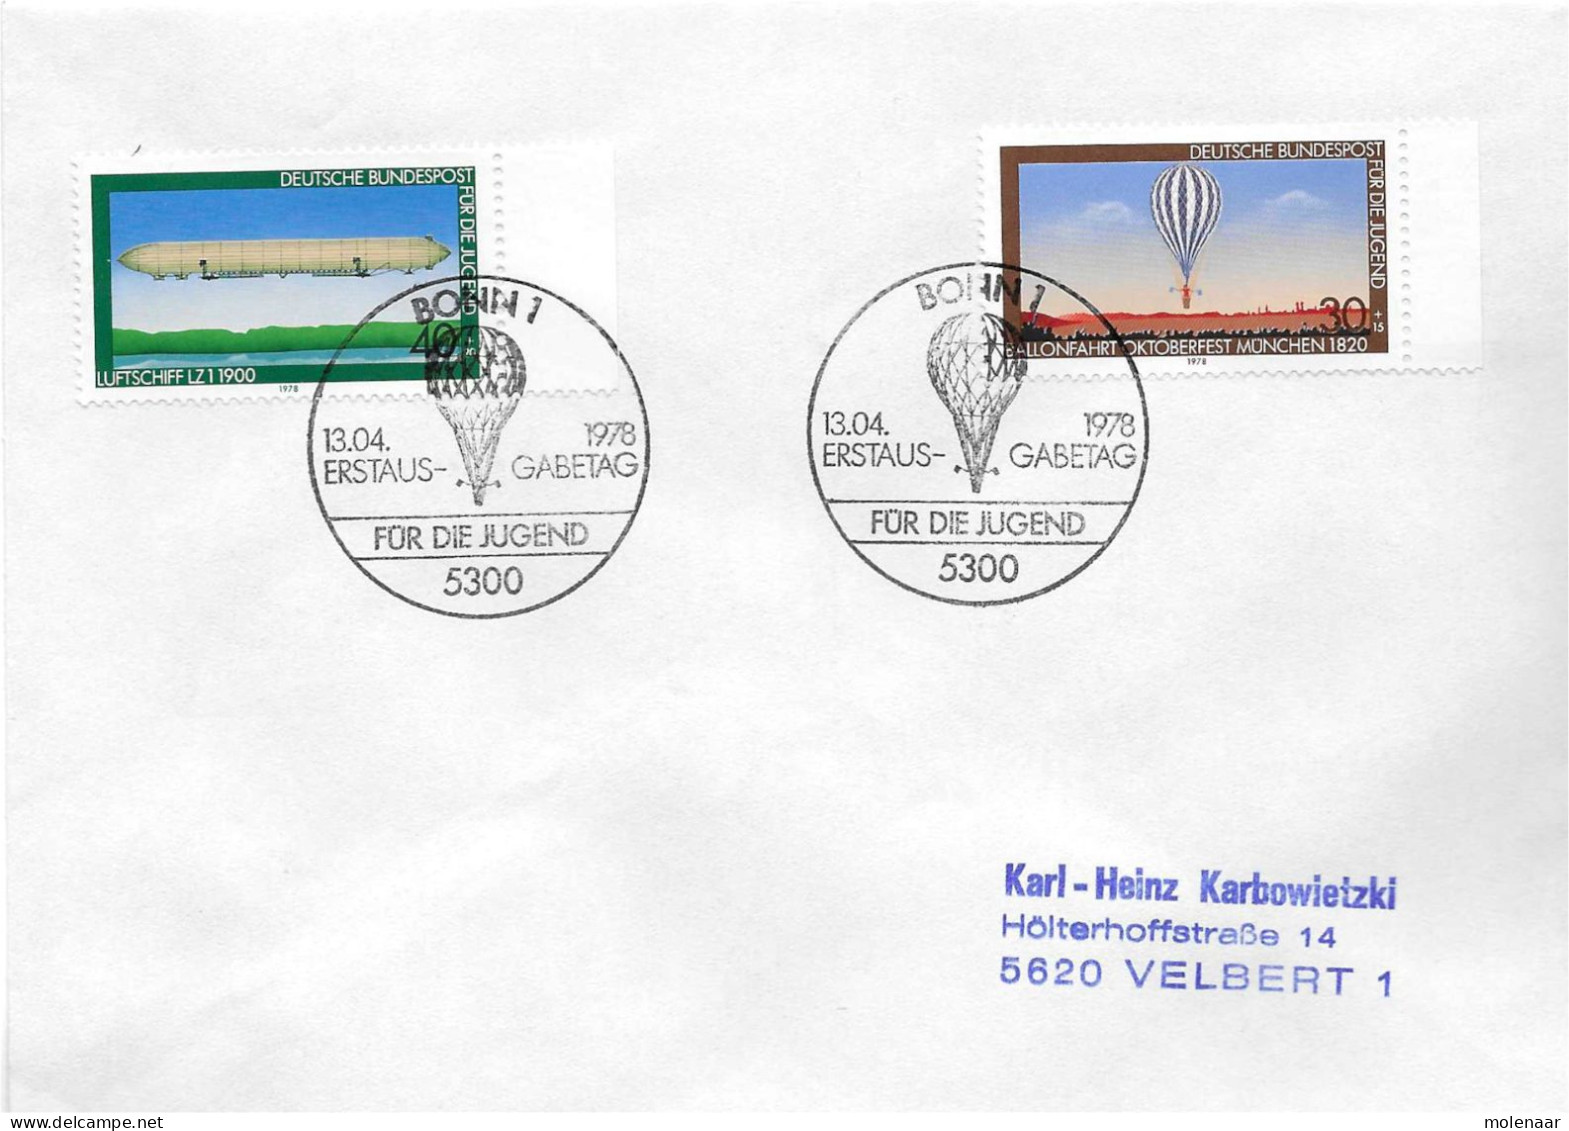 Postzegels > Europa > Duitsland > West-Duitsland > 1970-1979 > Brief Met No. 964e 965 (17373) - Covers & Documents